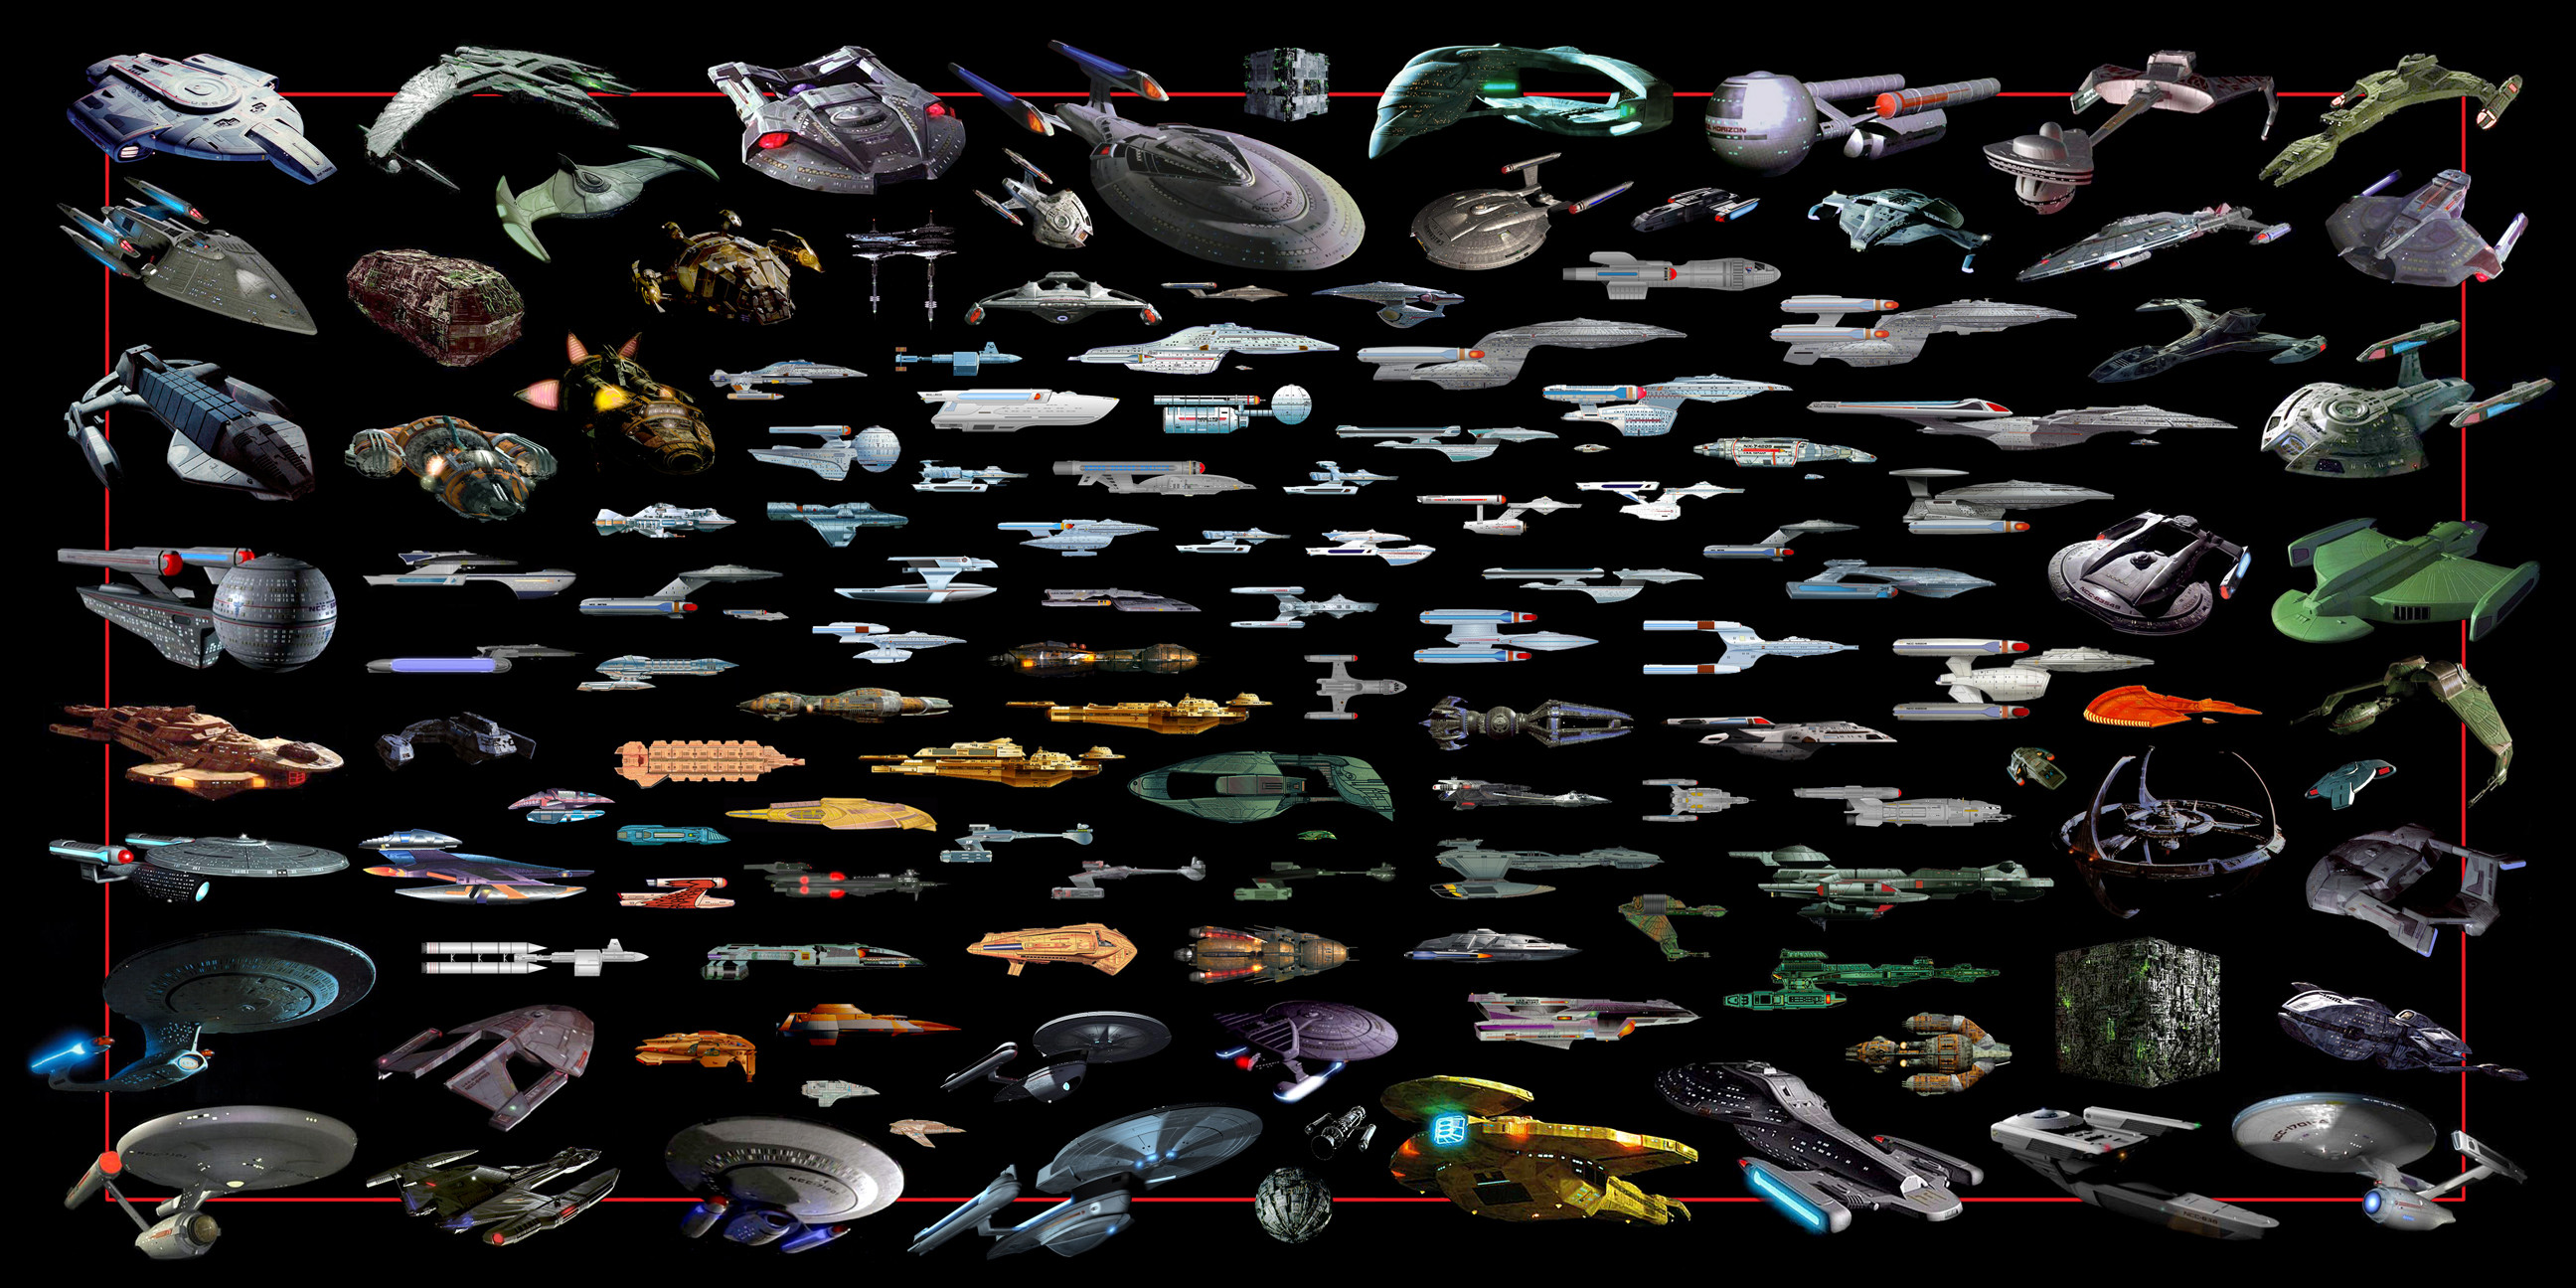 2592x1296 Star Trek Ships | Star Trek Ships and Stuff | Flickr - Photo Sharing!